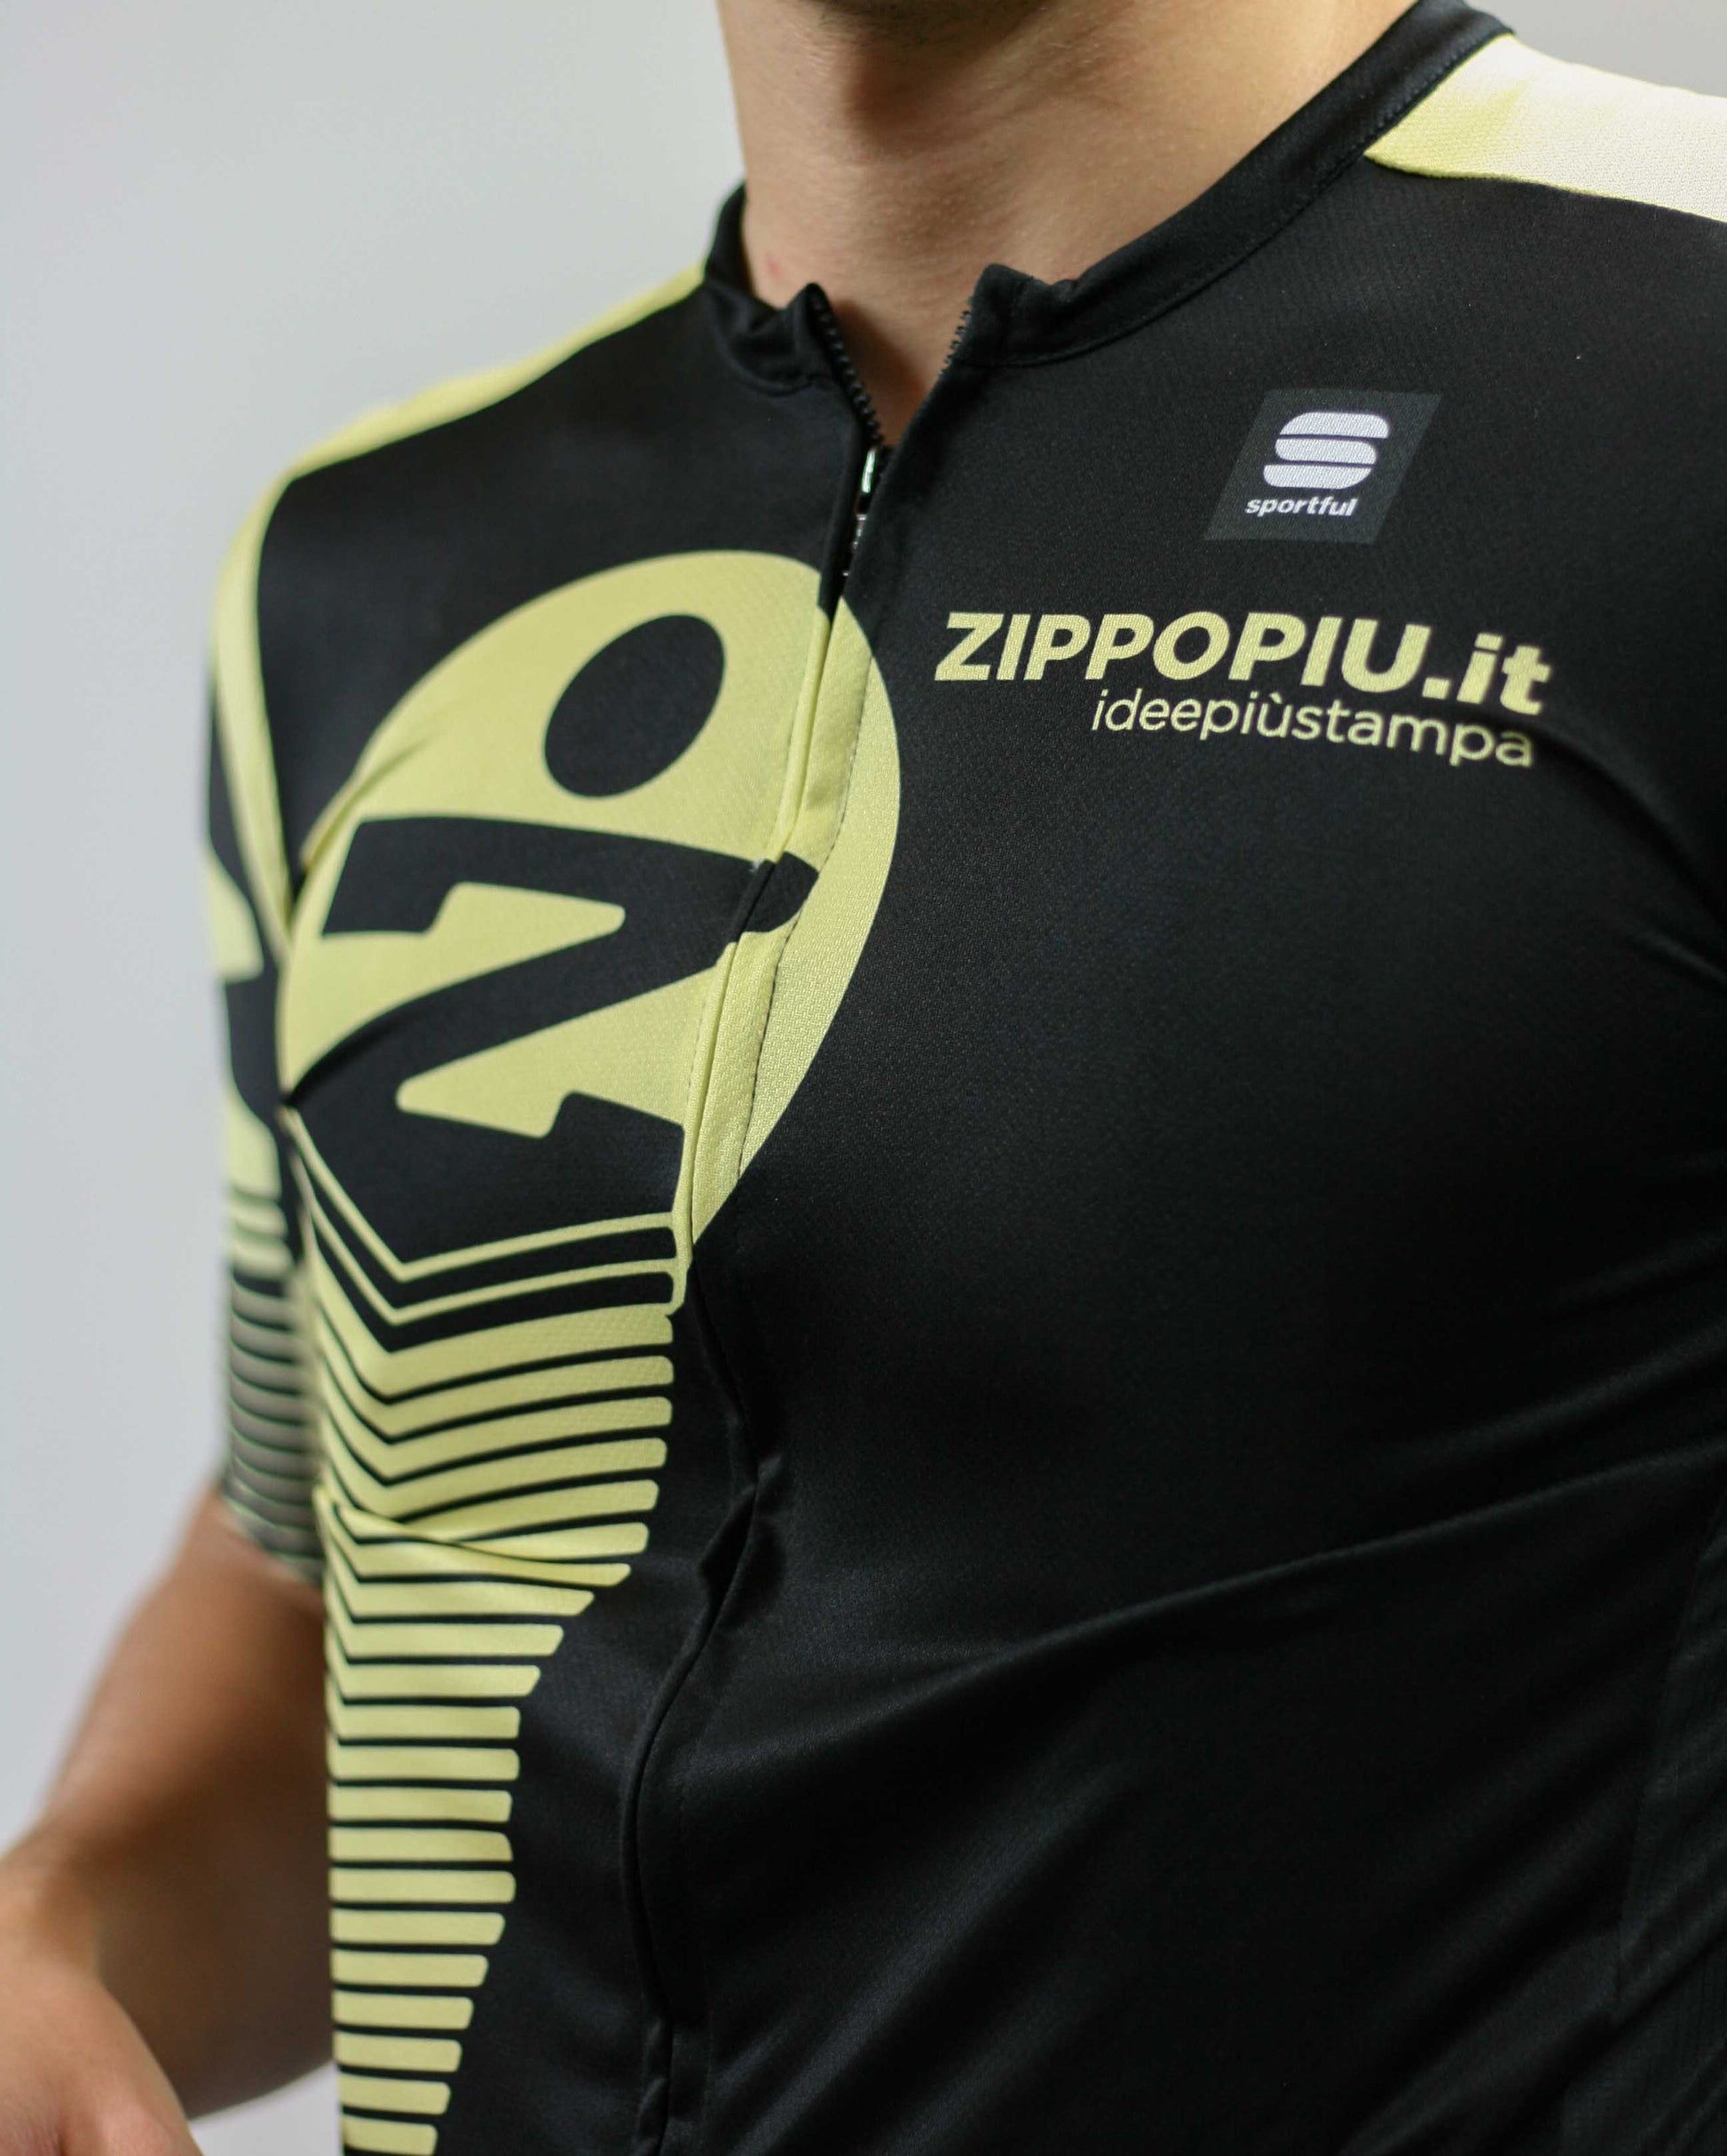 Completo Maglia + Pantaloncini - UFFICIALE ZIPPOPIU.it Cycling Team ZIPPOPIU.it